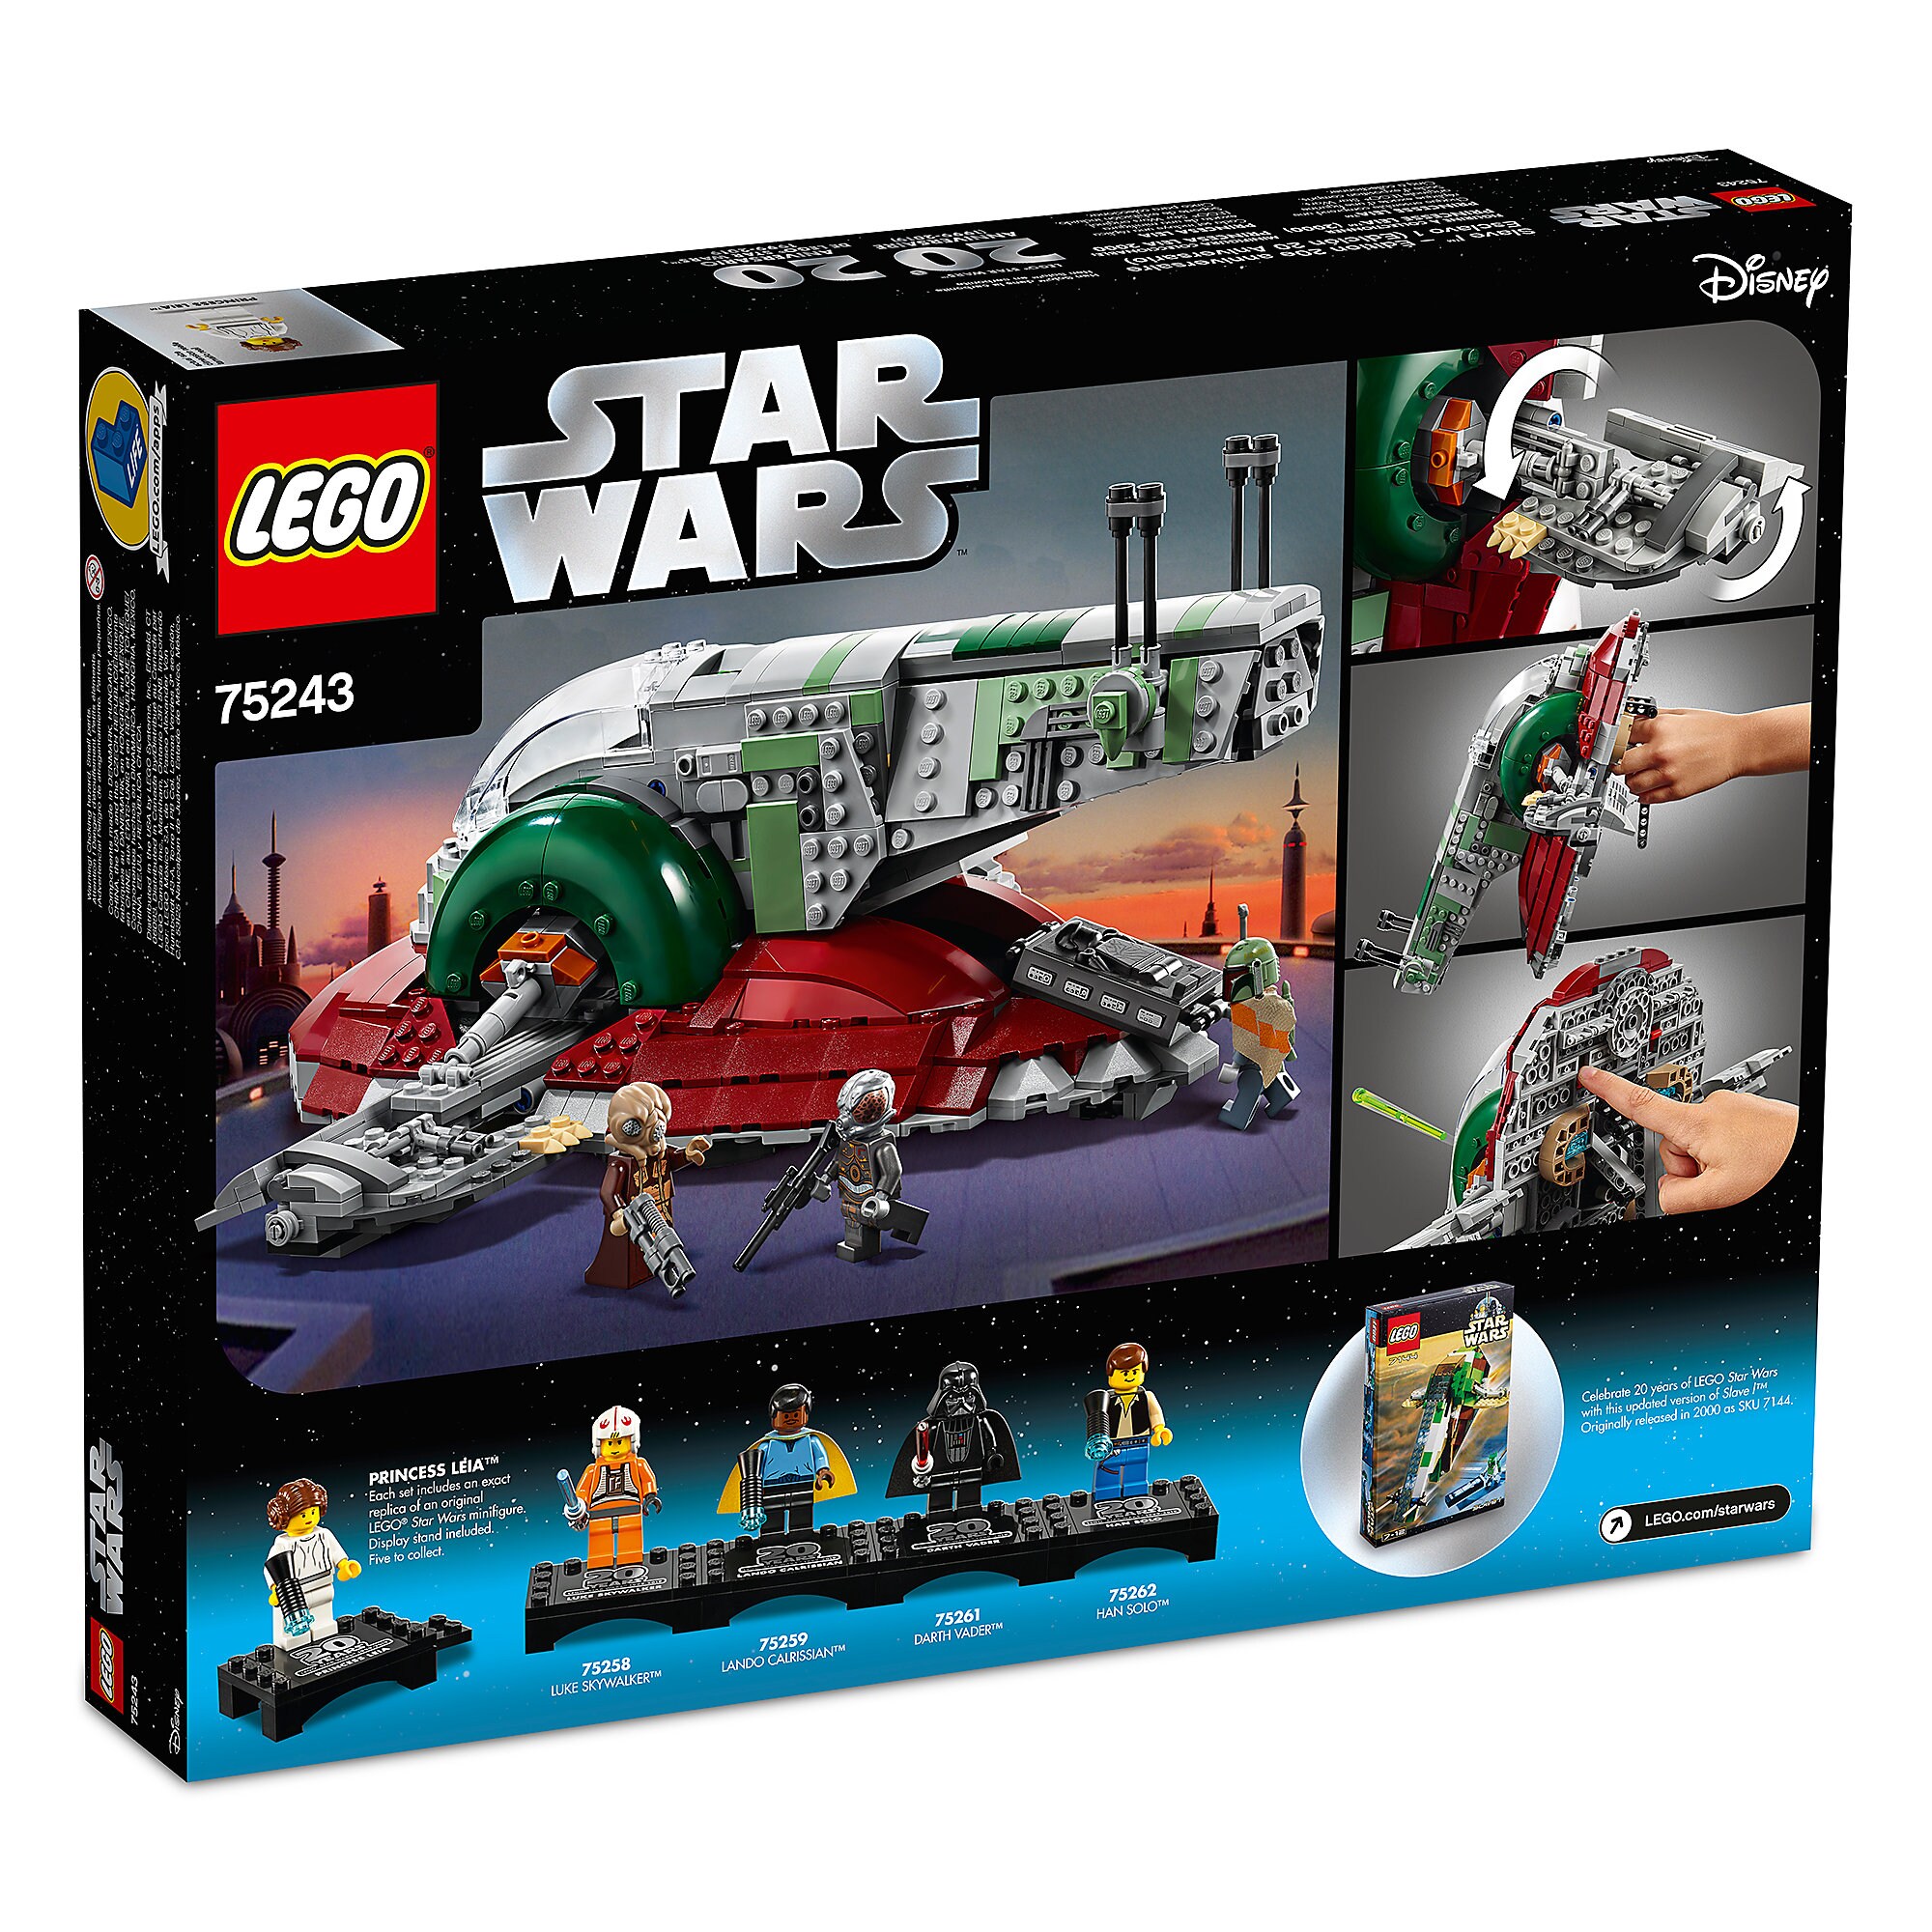 Slave I - 20th Anniversary Edition Play Set by LEGO - Star Wars